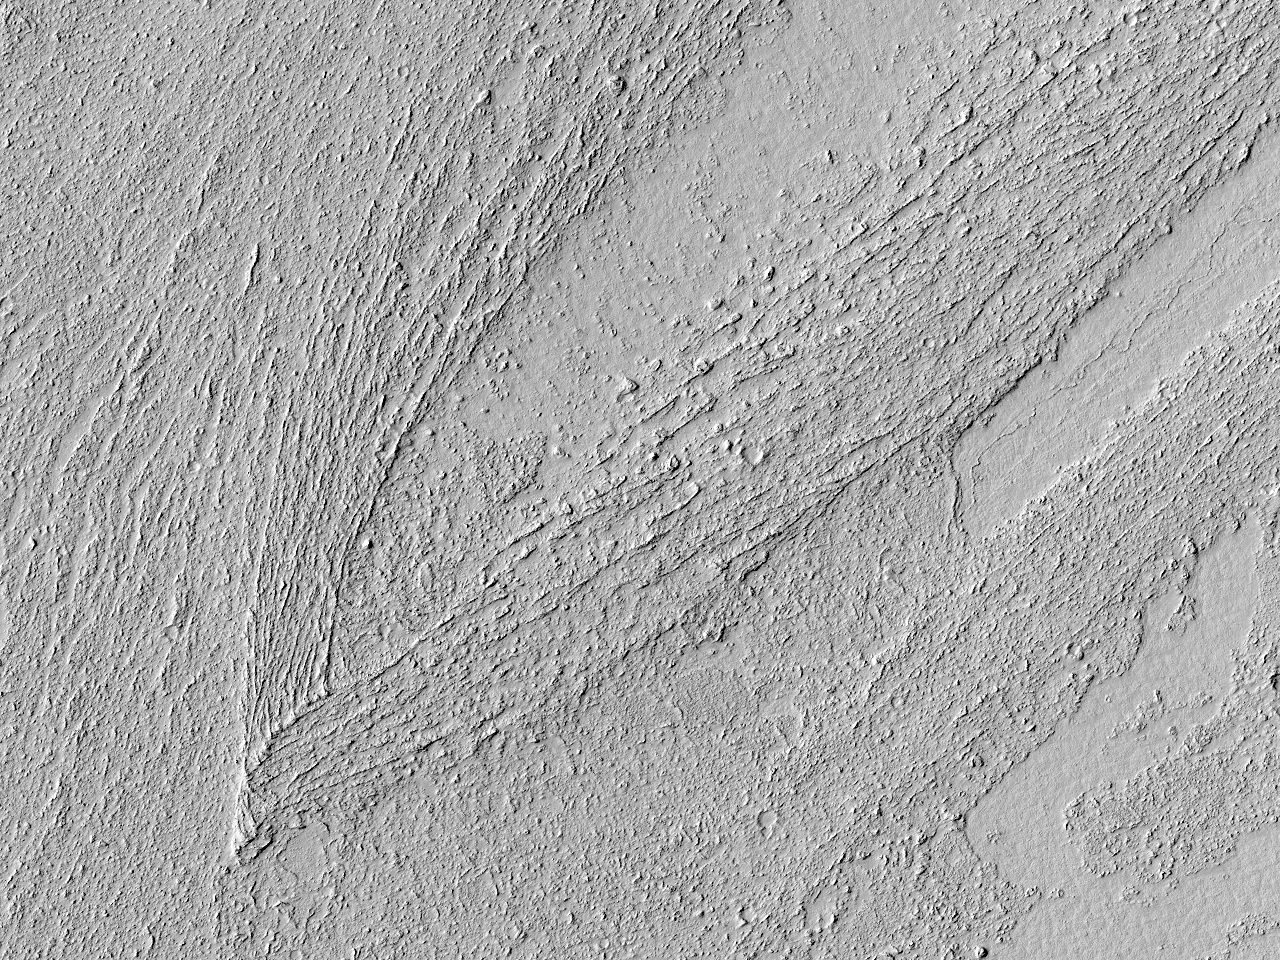 Sinais de antigos fluxos de lavas nos vales de Marte